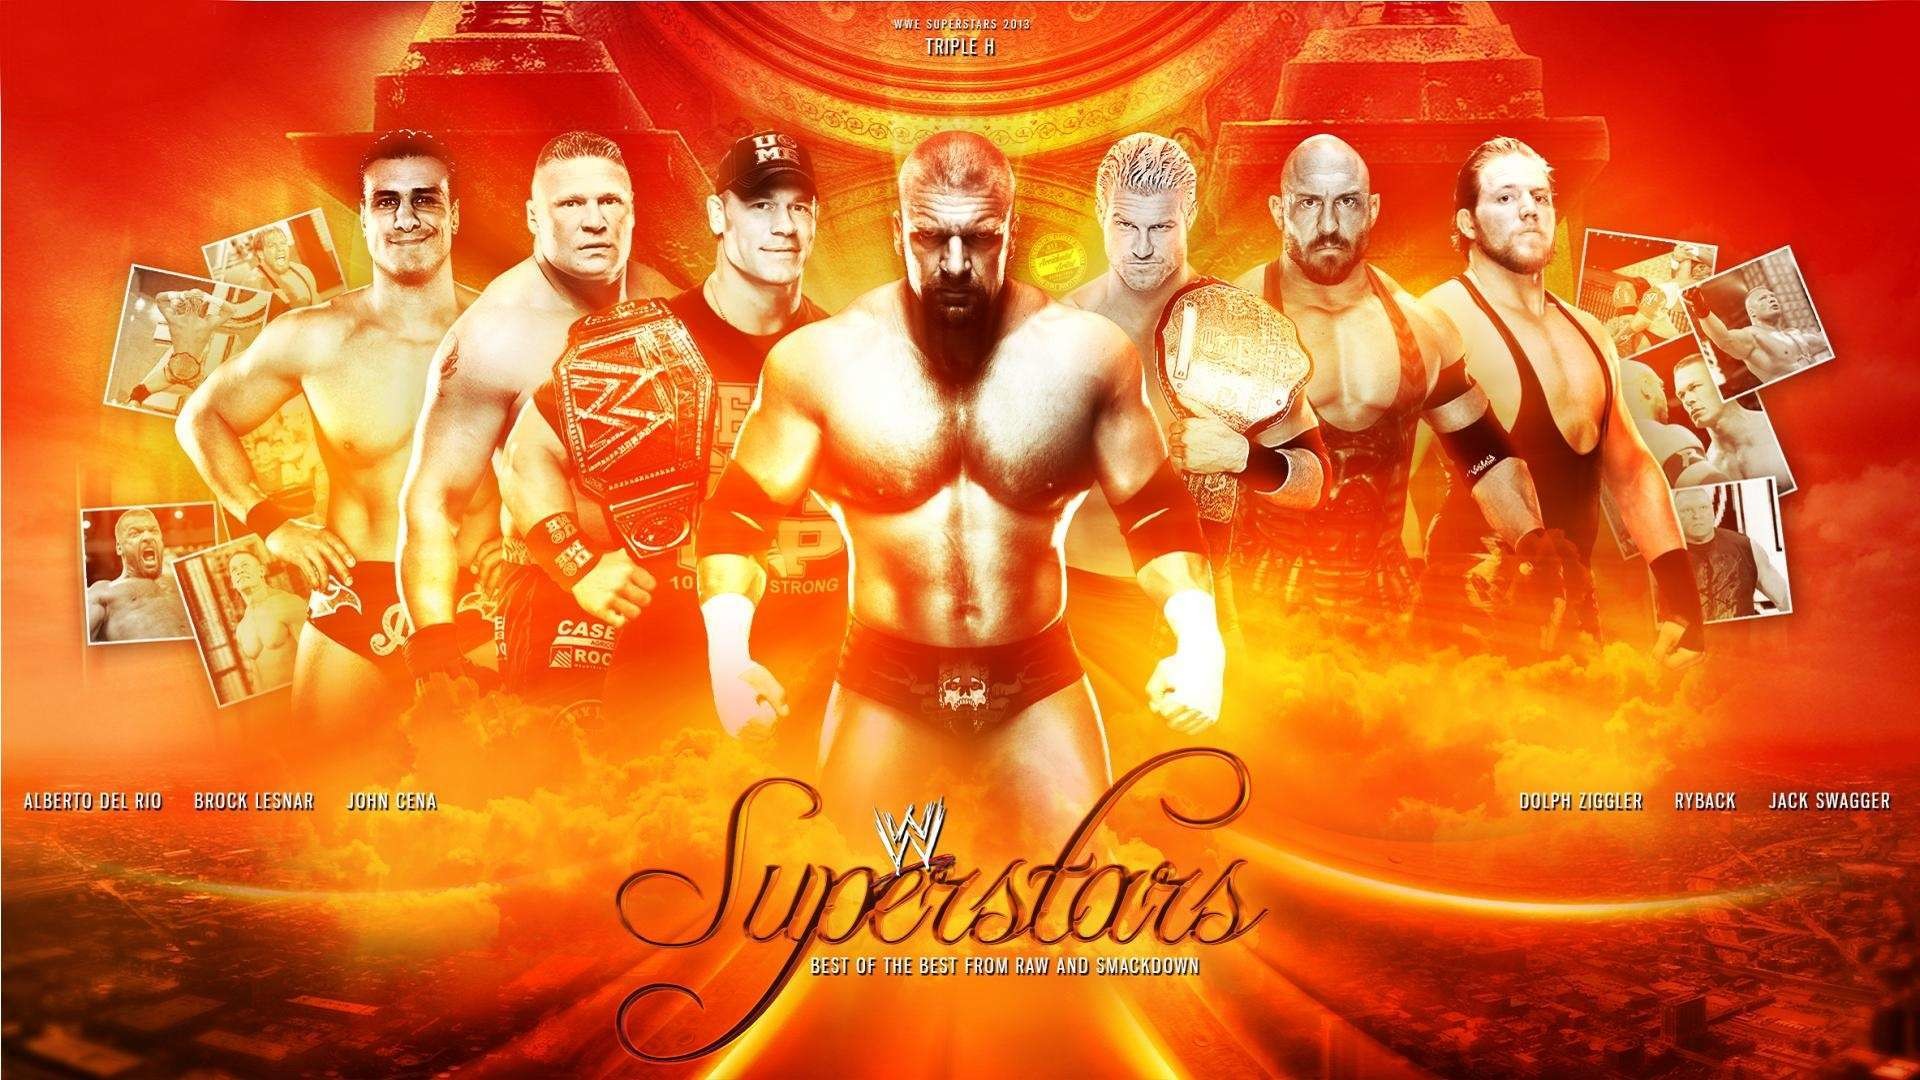 1920x1080 Wallpaper: WWE Superstars Wallpaper HD 1080p. Upload at October 31 .